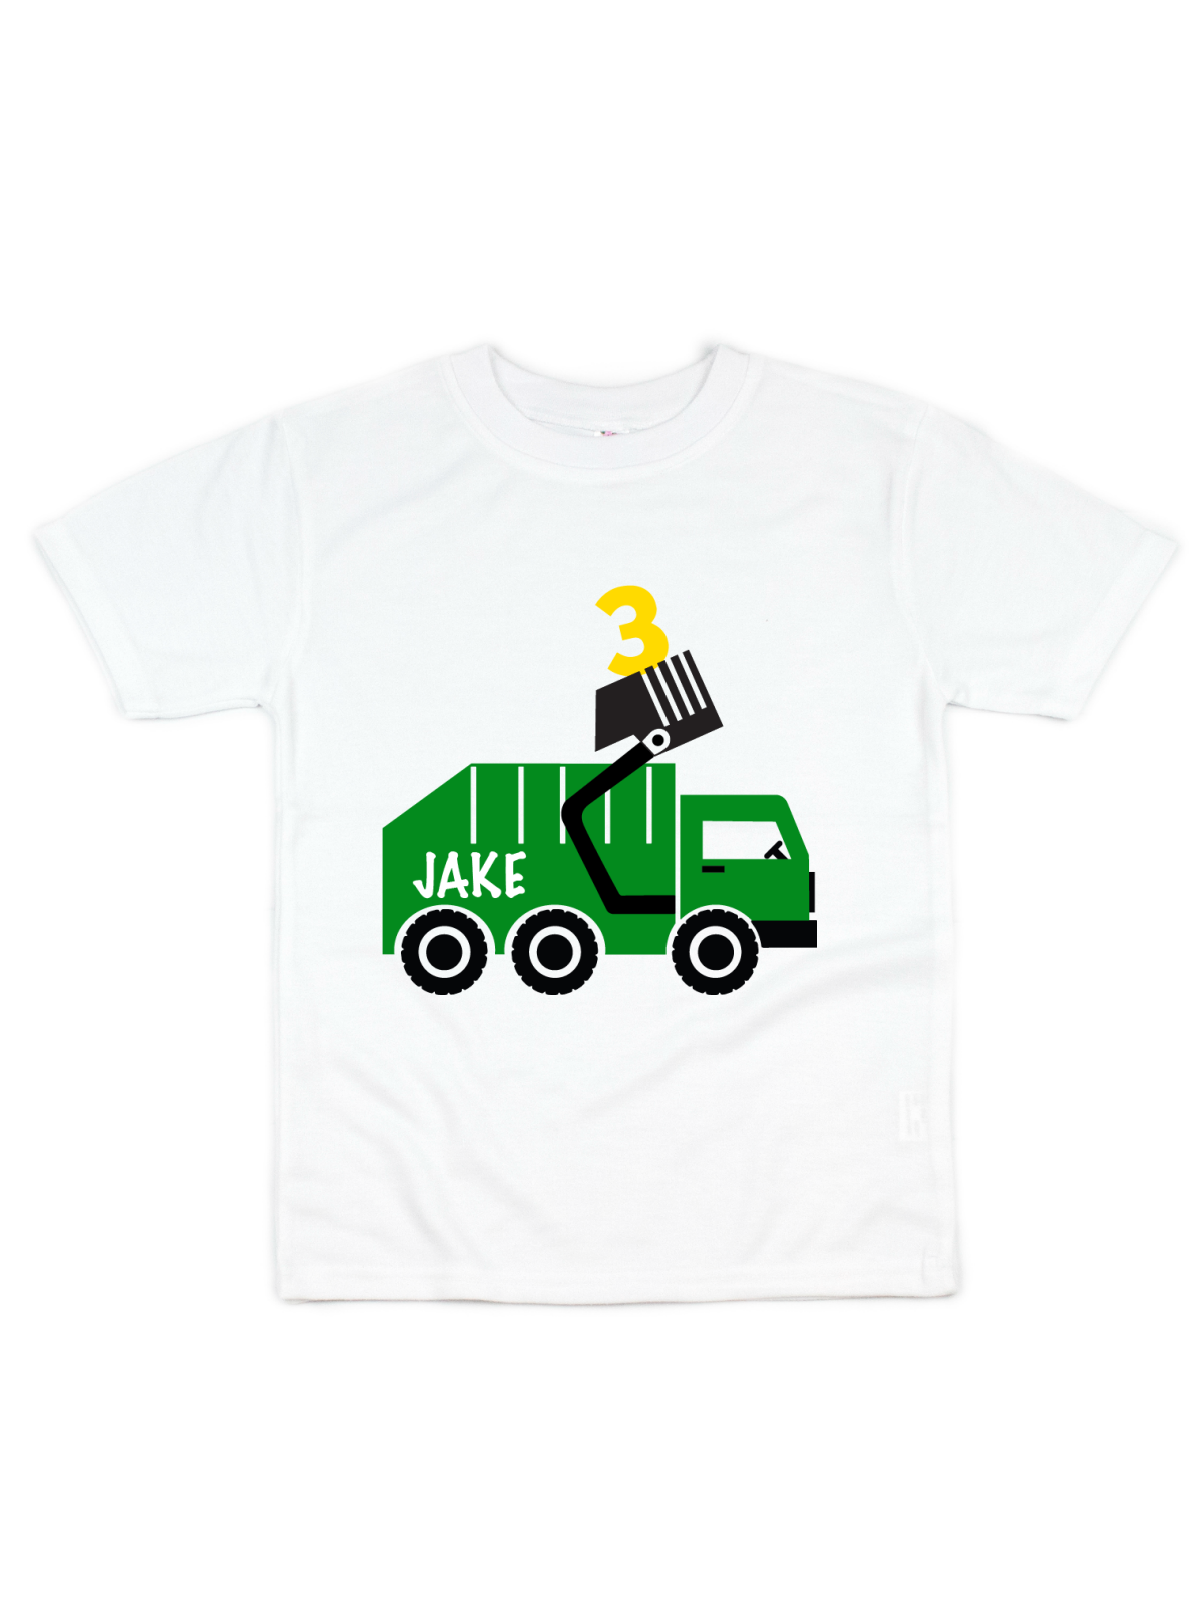 Garbage Truck Kids Shirt - Gray, Green, & White